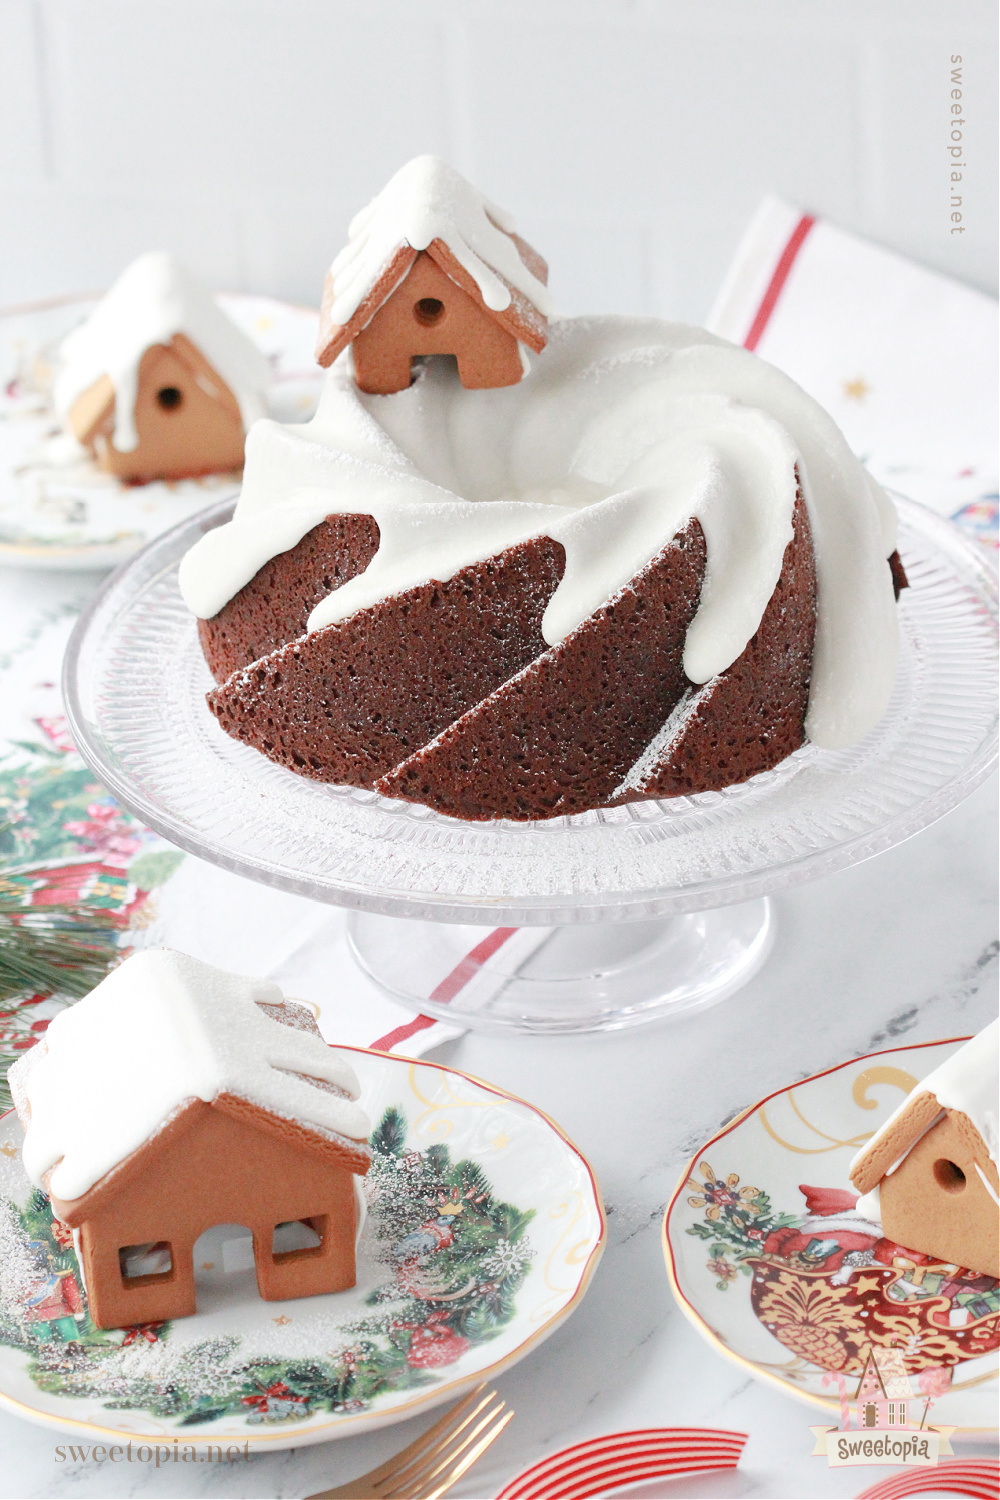 https://sweetopia.net/wp-content/uploads/2022/12/gingerbread-bundt-cake-recipe-williams-sonoma-bundt-pan.jpg